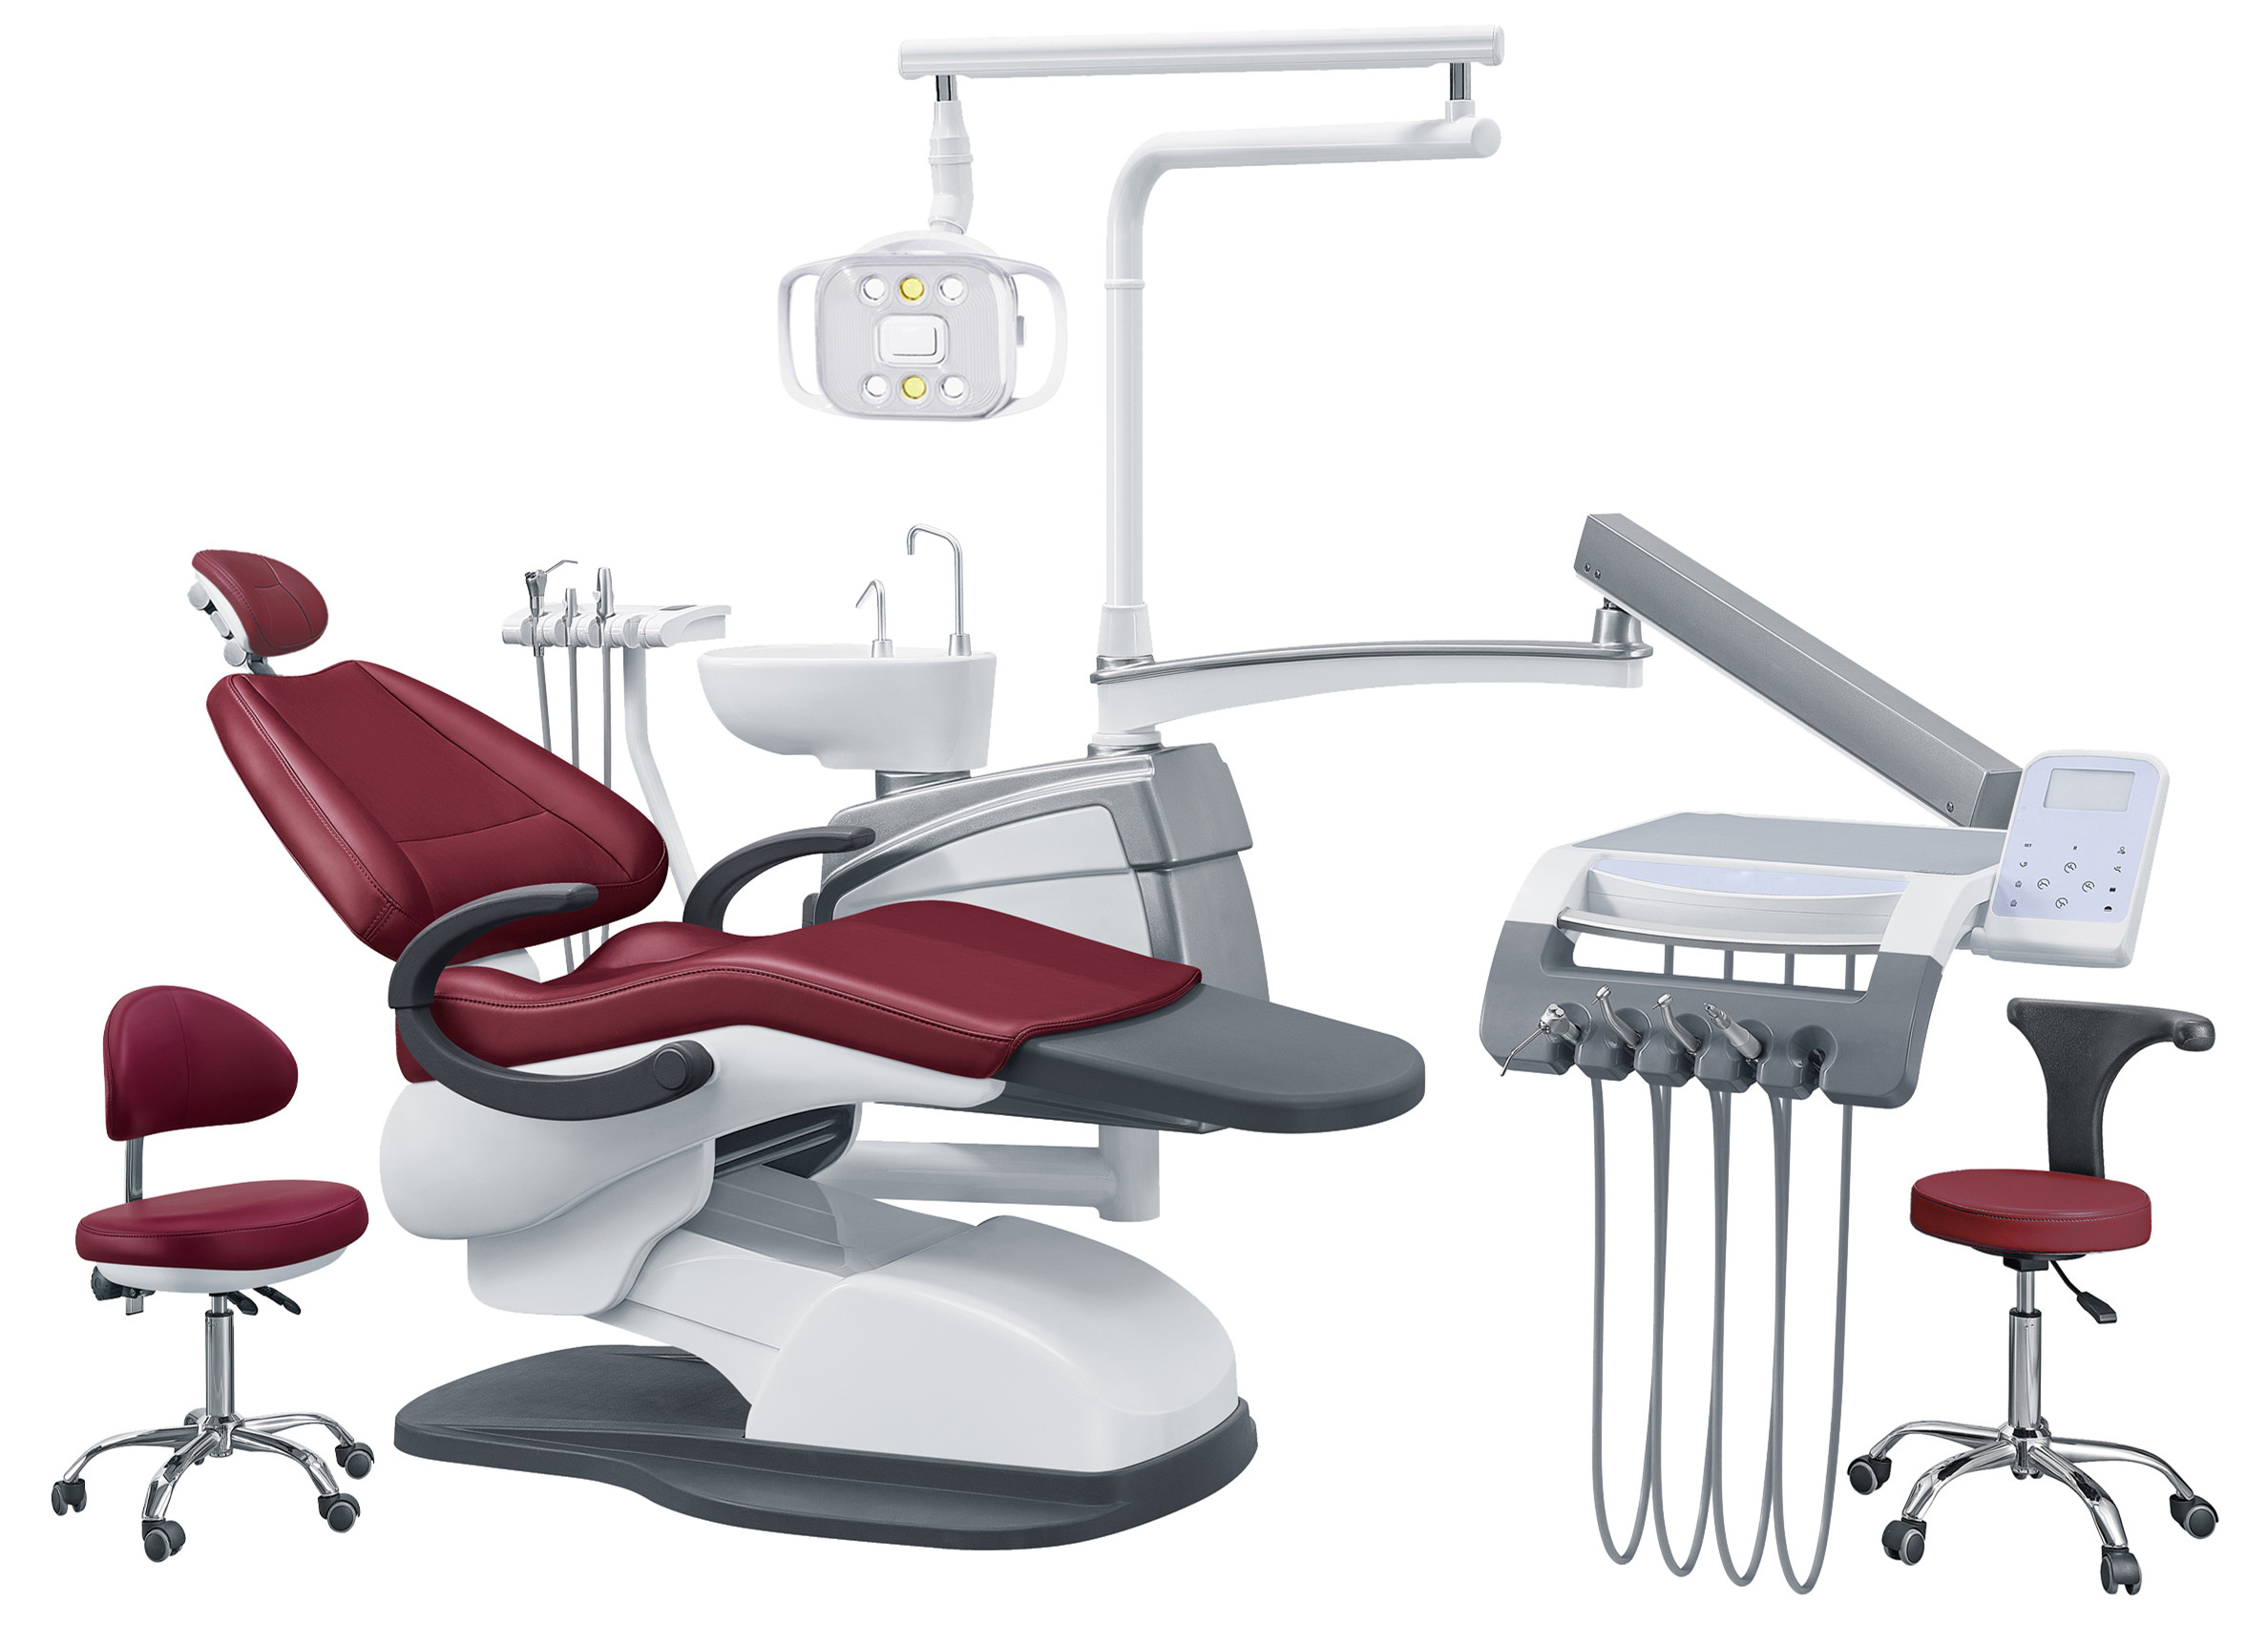 MS-2810 Dental chair